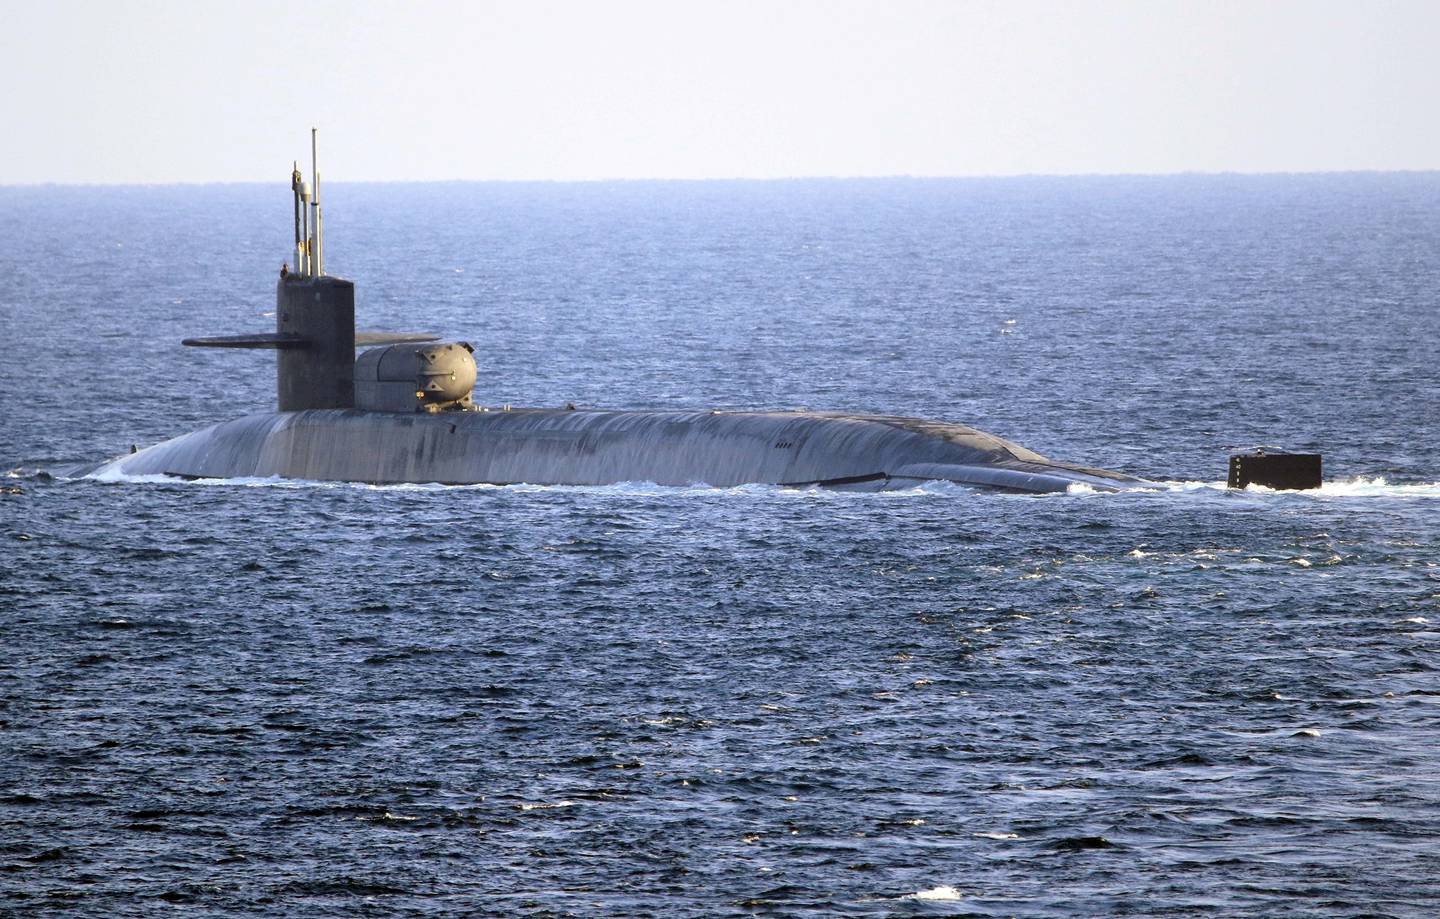 The guided-missile submarine USS Georgia transits the Strait of Hormuz on Monday, Dec. 21, 2020.